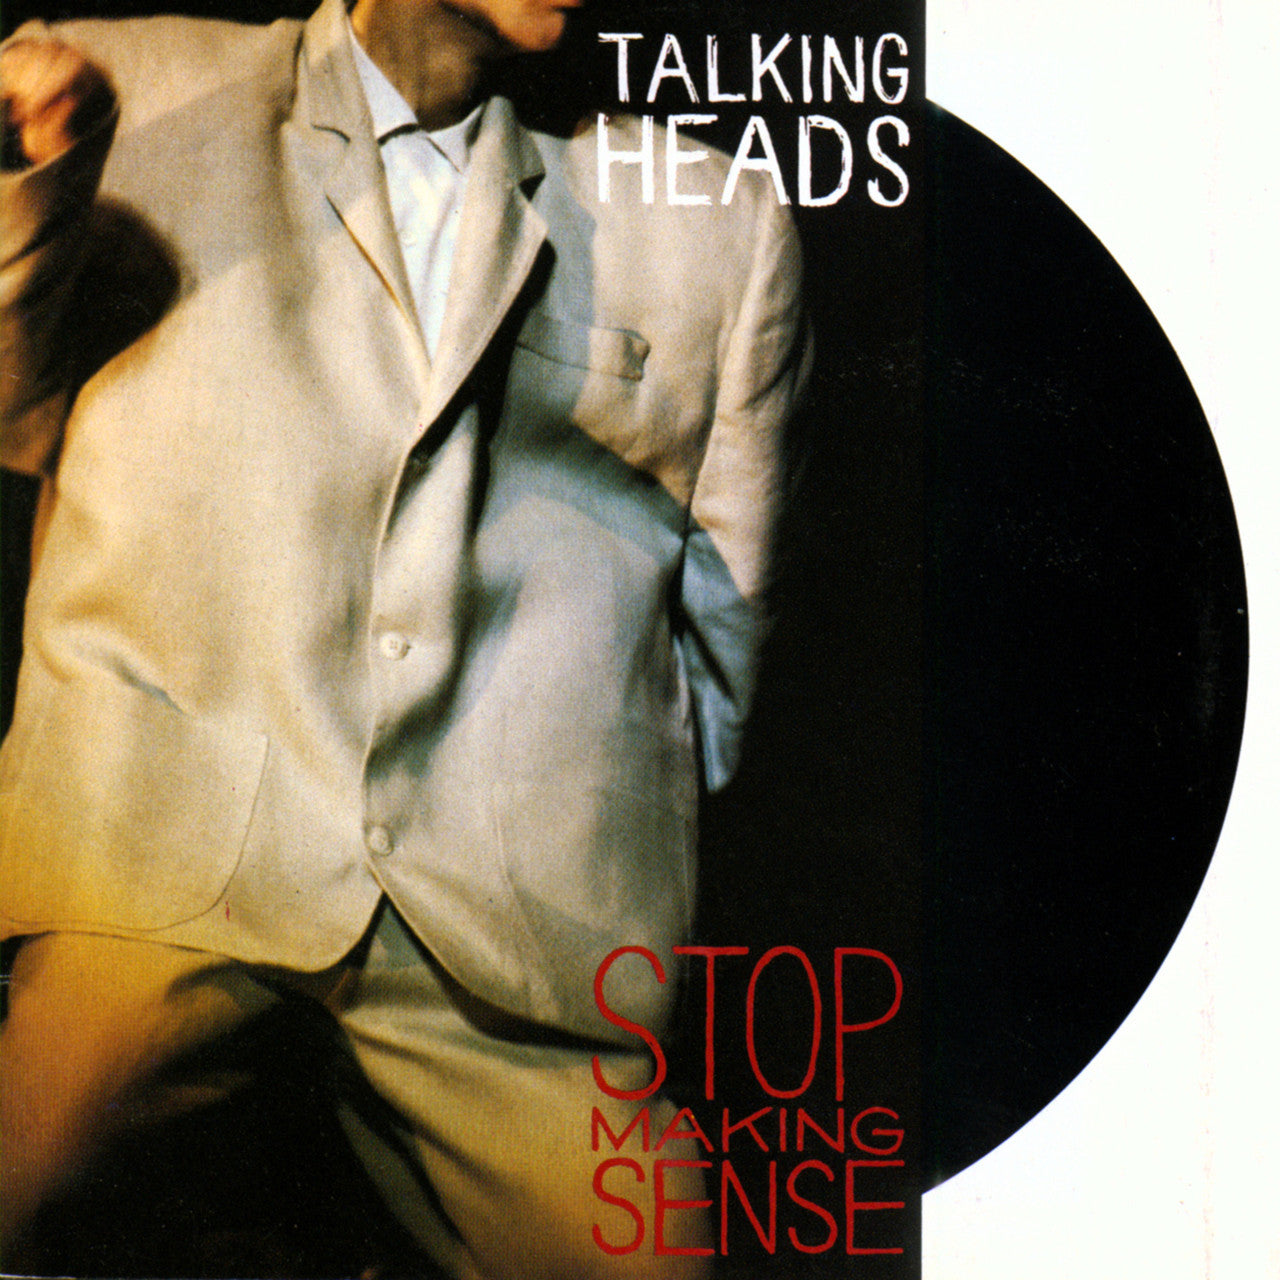 Buy Talking Heads - Stop Making Sense (Deluxe 2xLP Black Vinyl)